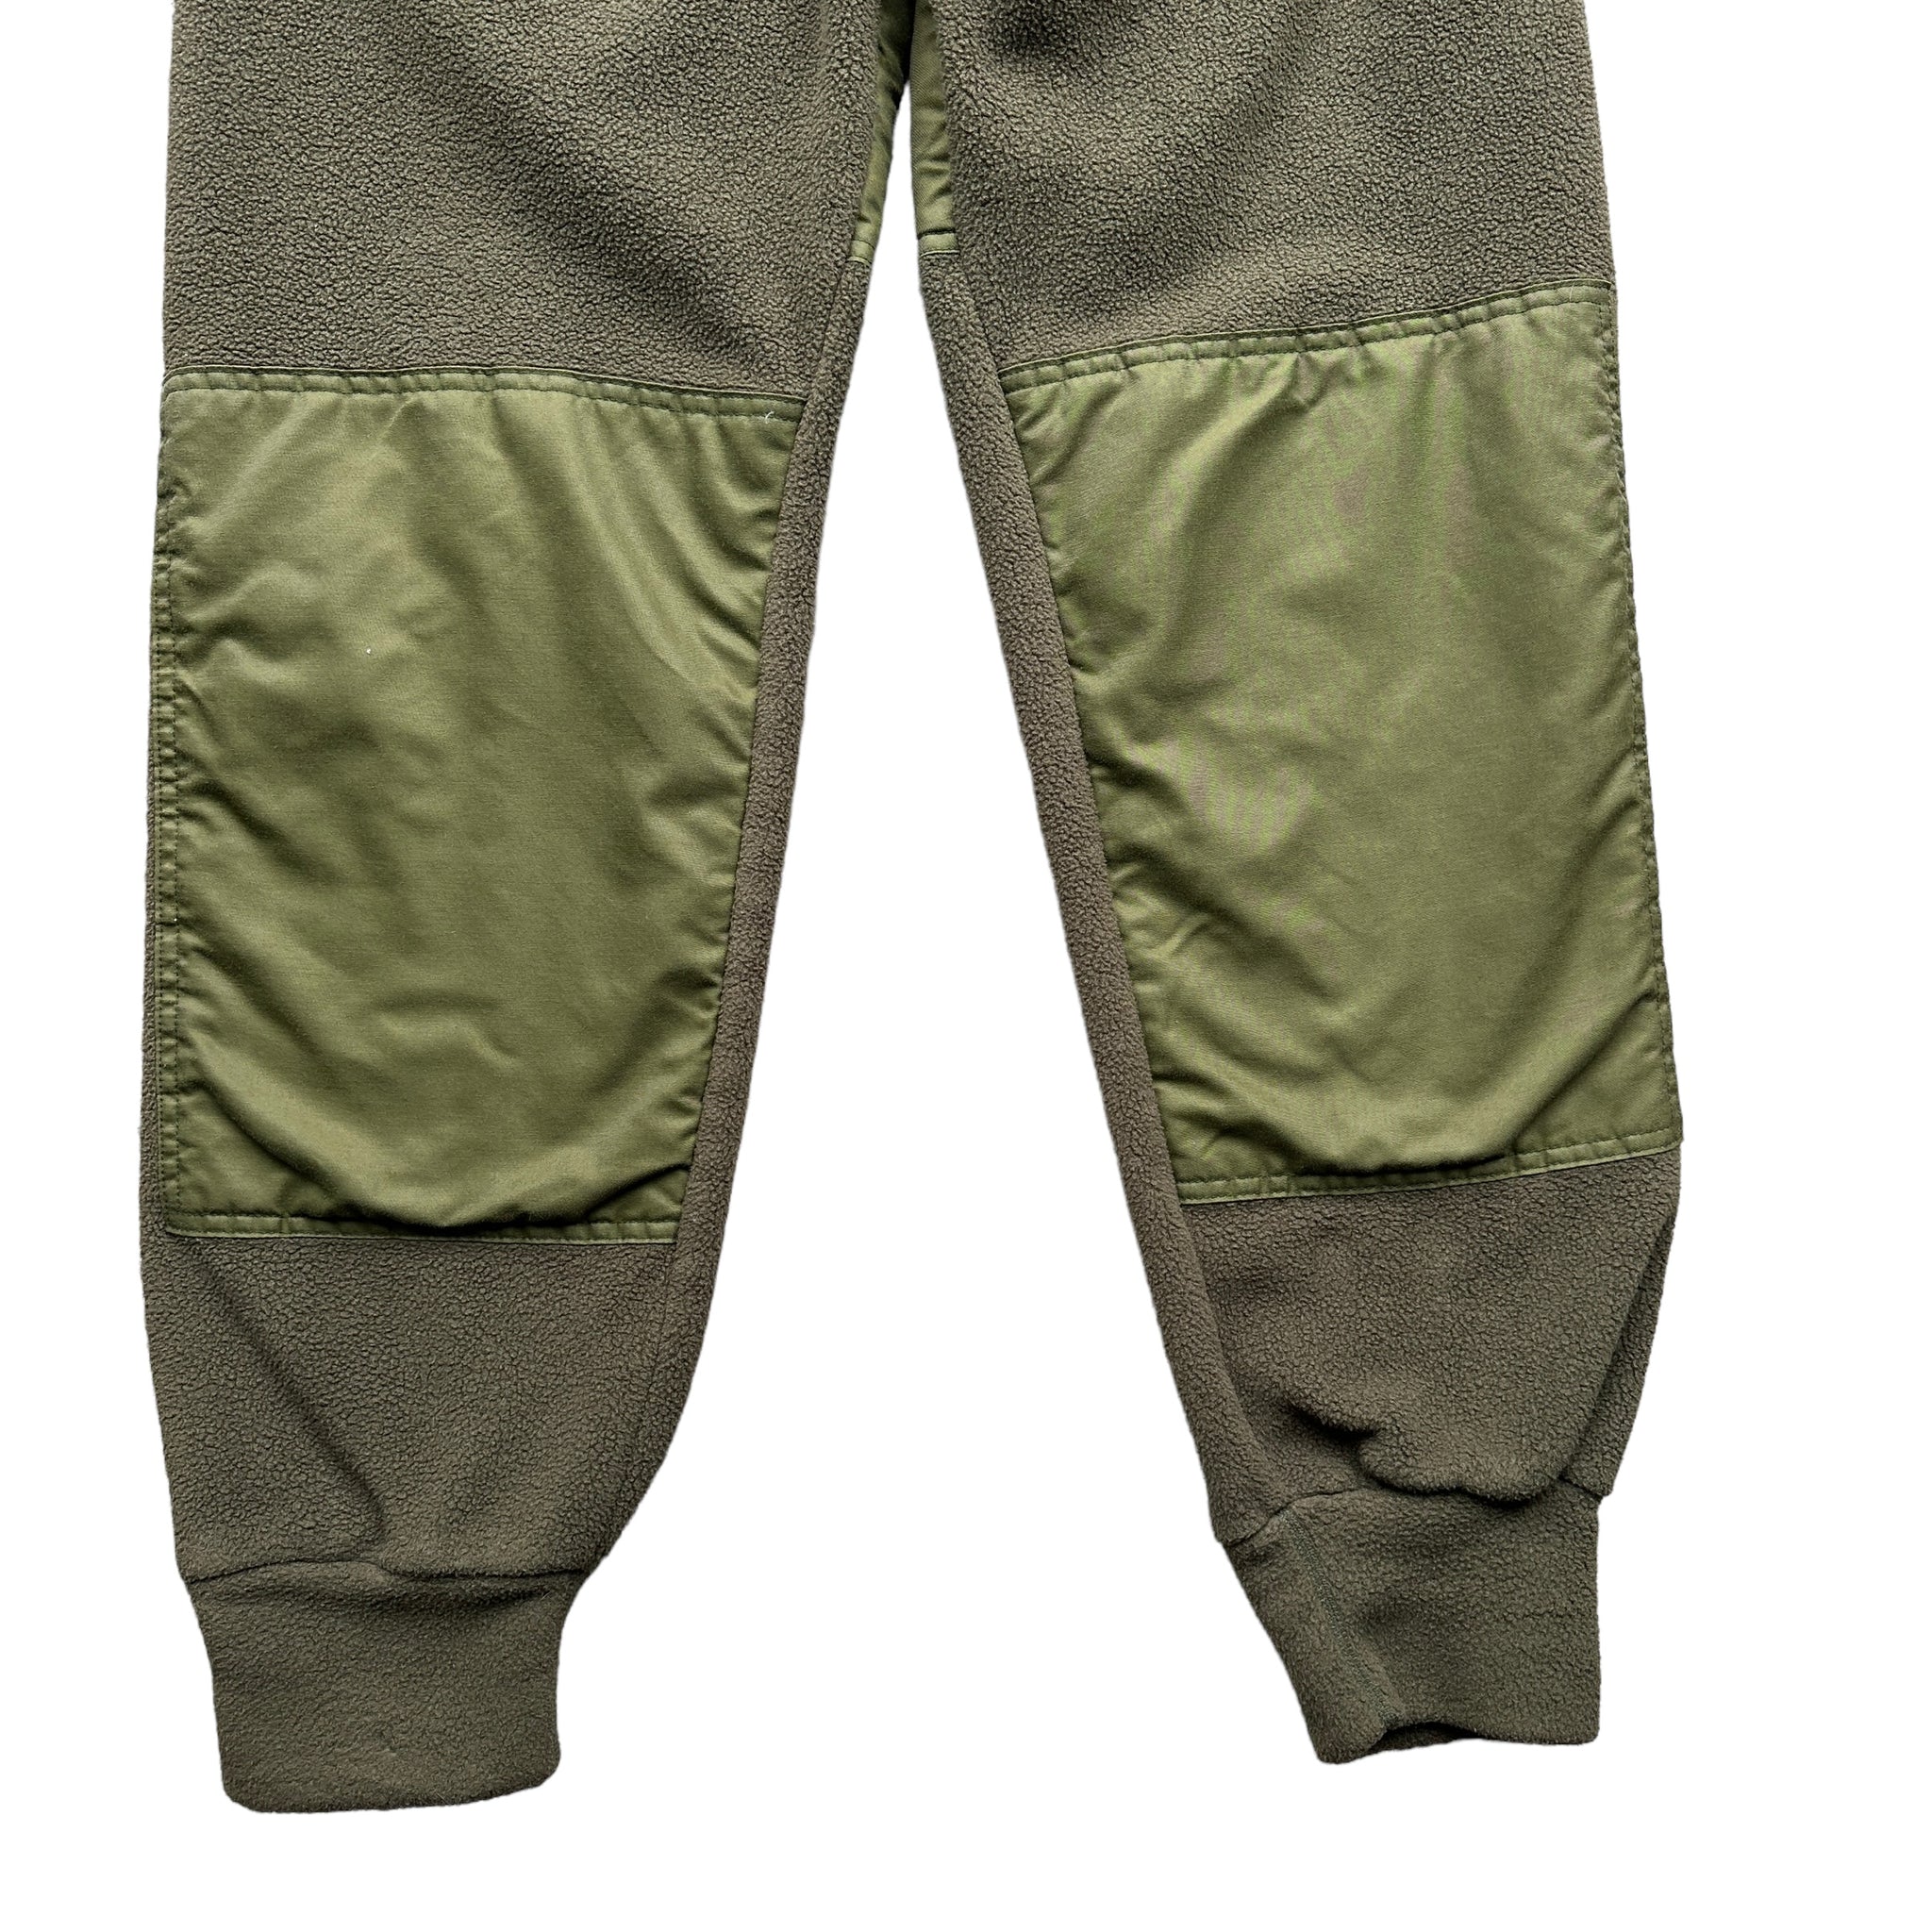 80s Canadian Military fleece pants medium